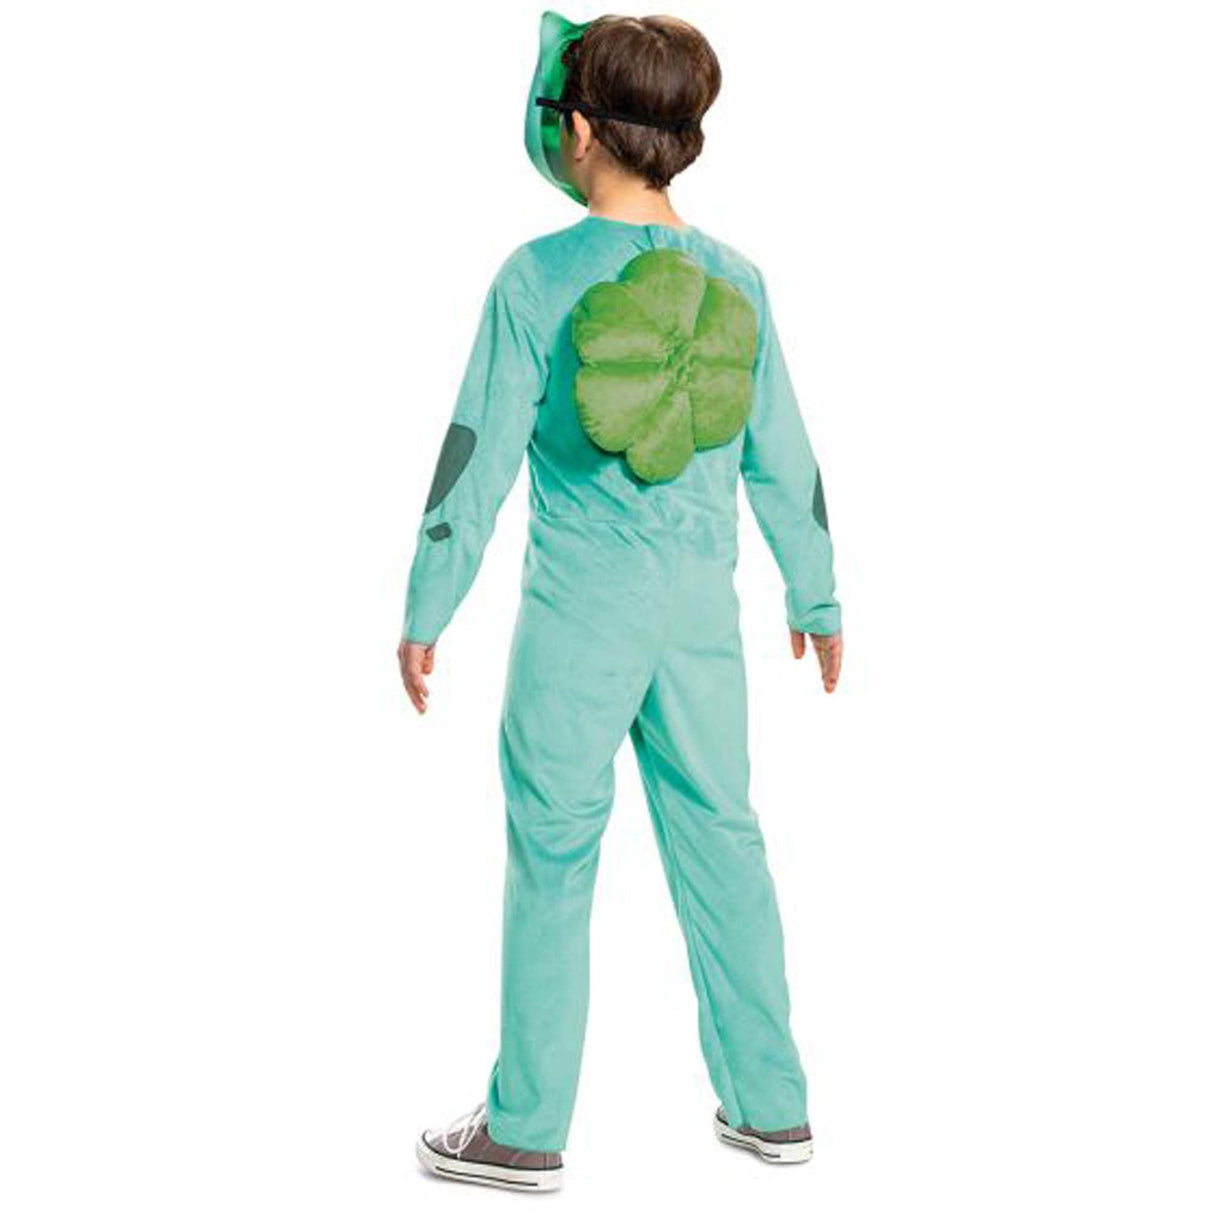 DISGUISE (TOY-SPORT) Costumes Pokémon Bulbasaur Jumpsuit Costume for Kids, Green Jumpsuit